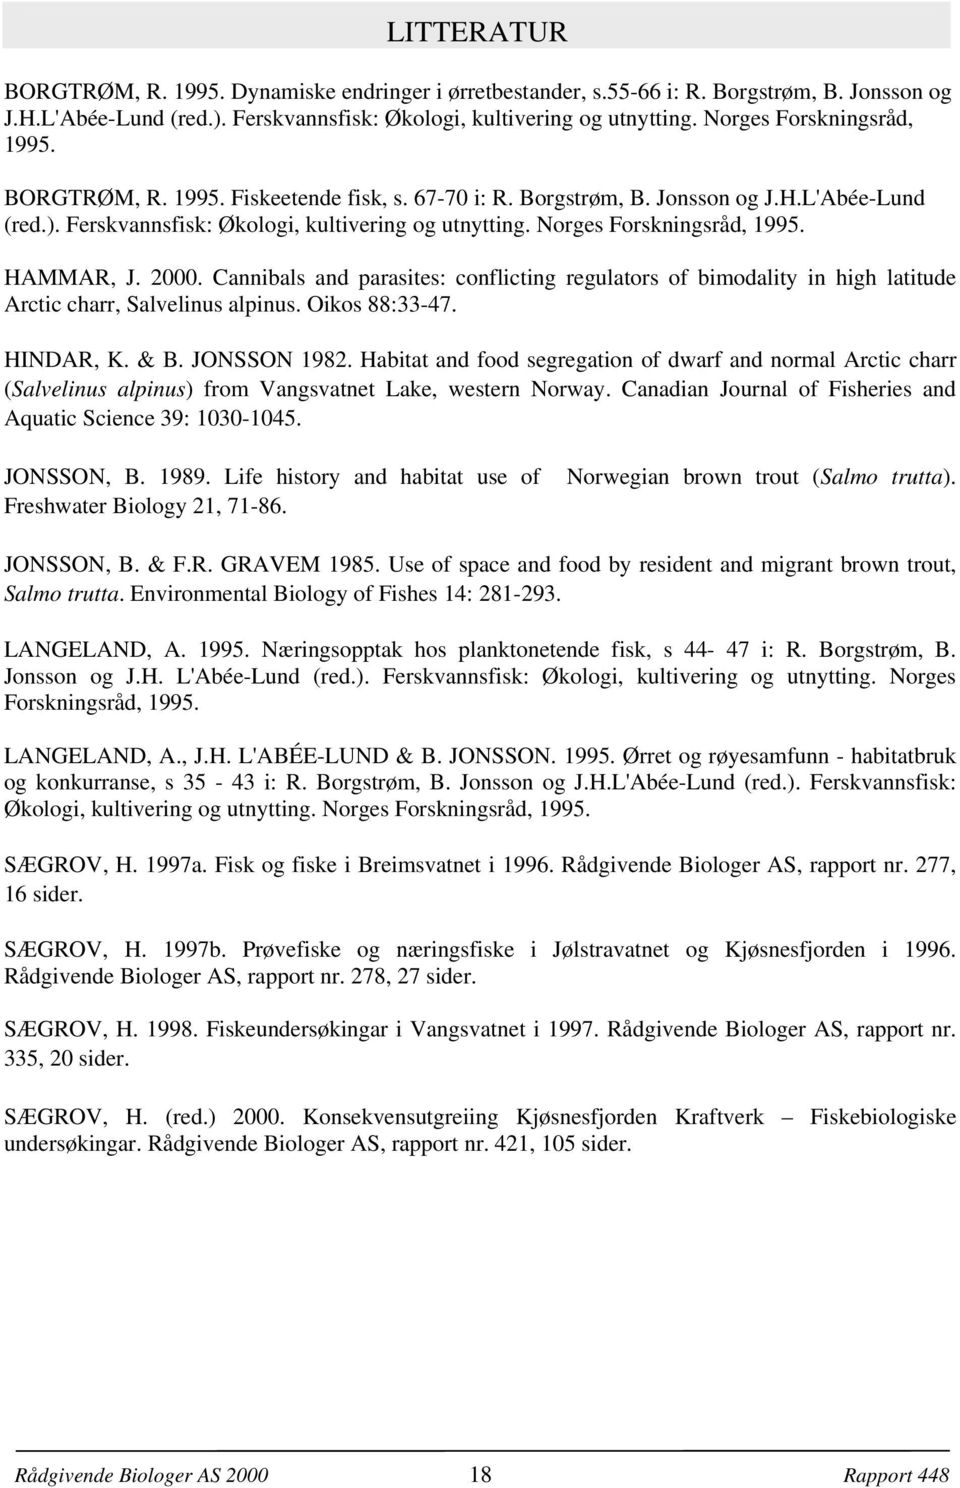 Norges Forskningsråd, 1995. HAMMAR, J. 2. Cannibals and parasites: conflicting regulators of bimodality in high latitude Arctic charr, Salvelinus alpinus. Oikos 88:33-47. HINDAR, K. & B. JONSSON 1982.